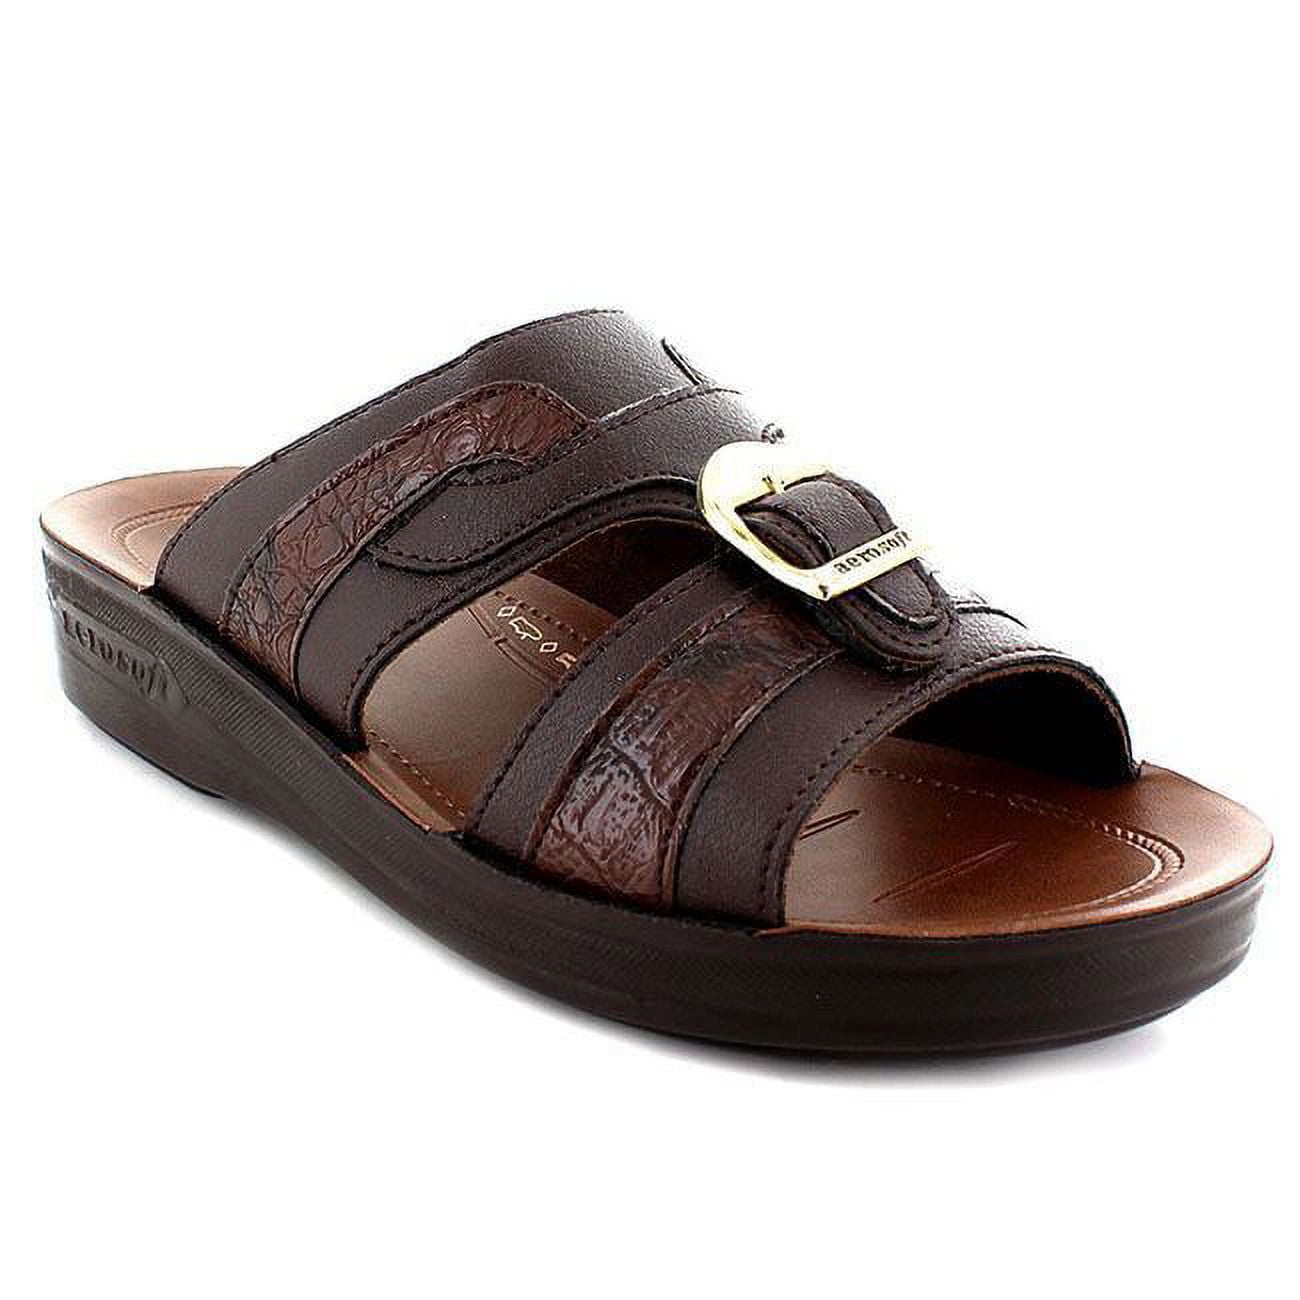 Aerosoft Ladies Sandals Orhopedic Comfort Sandals Choice of Colours Shimmer  | eBay